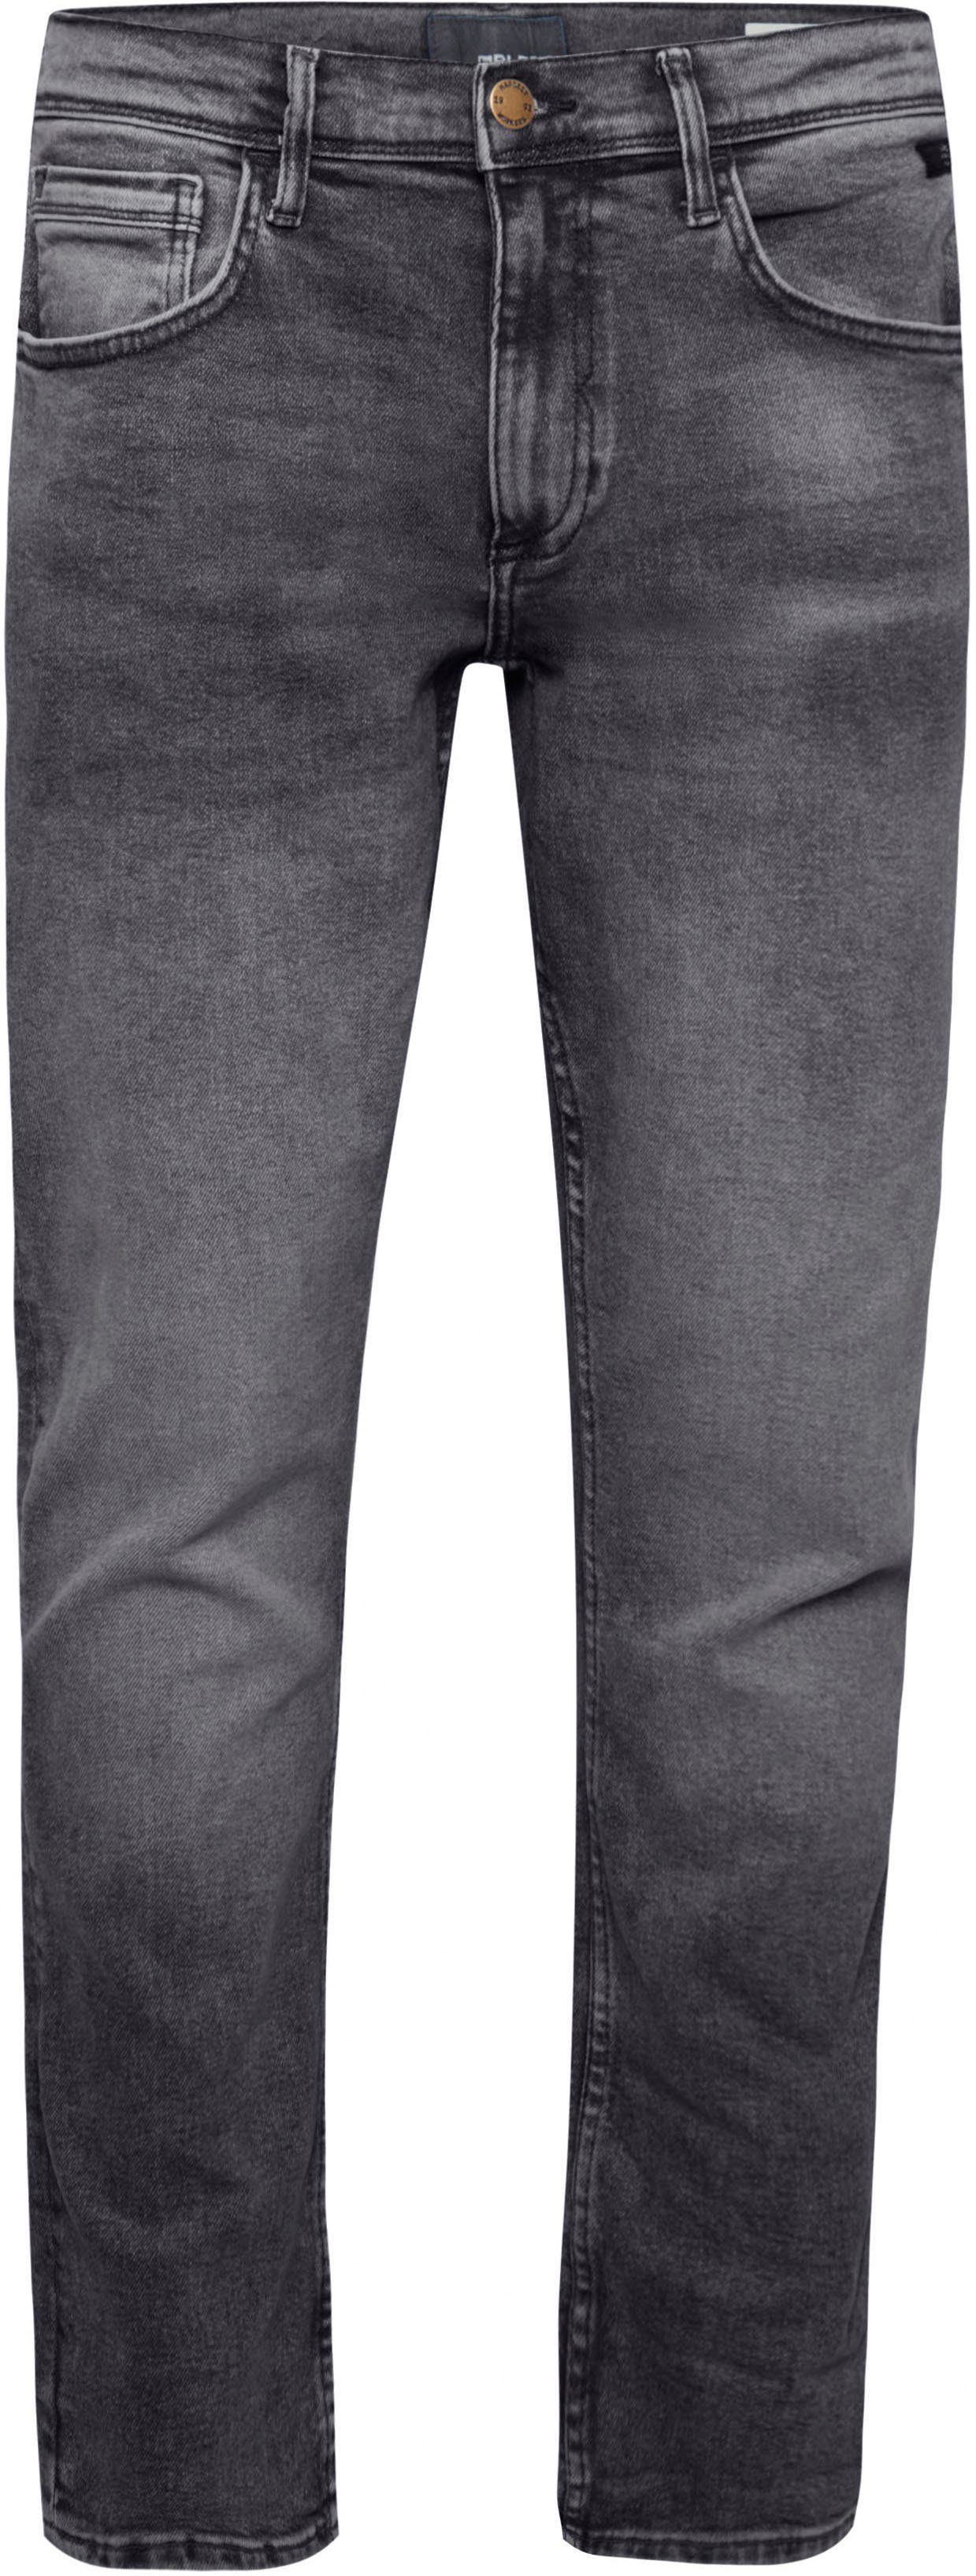 Jeans Multiflex Blizzard BL grey Blend 5-Pocket-Jeans